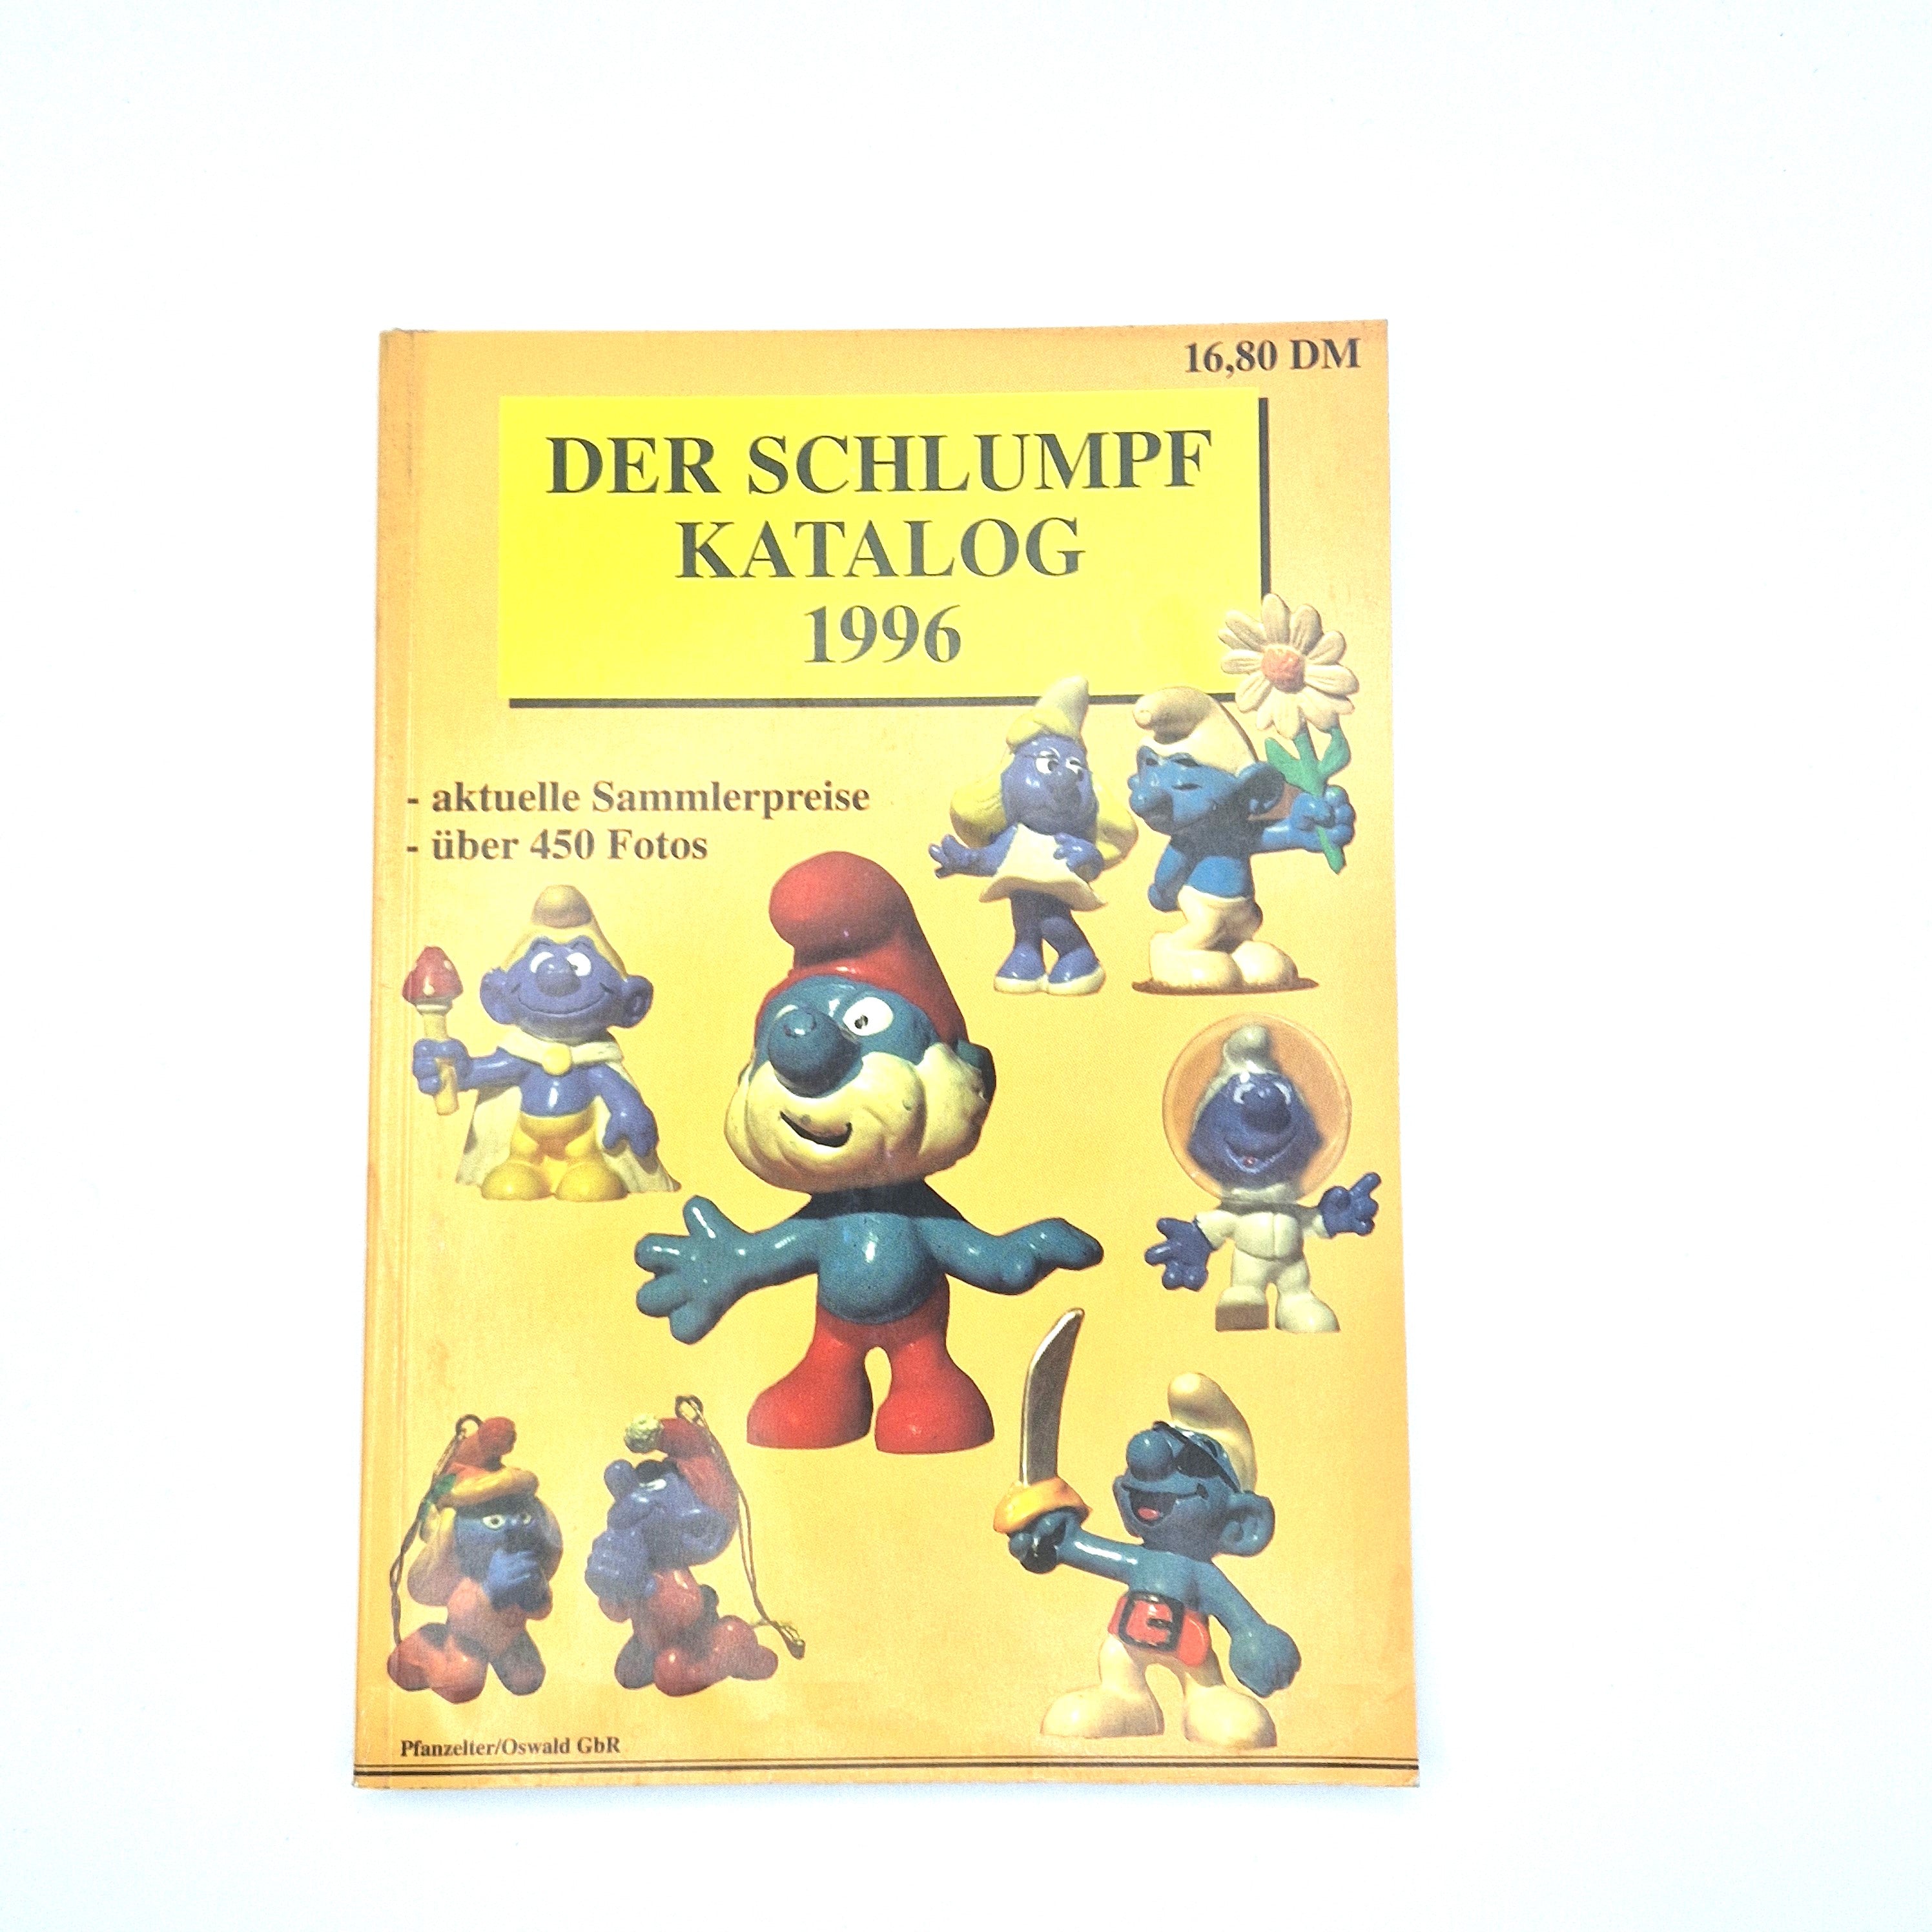 Der Schlumpfkatalog 1996 Smörfer's  Pfanzelter/Oswald GbR   